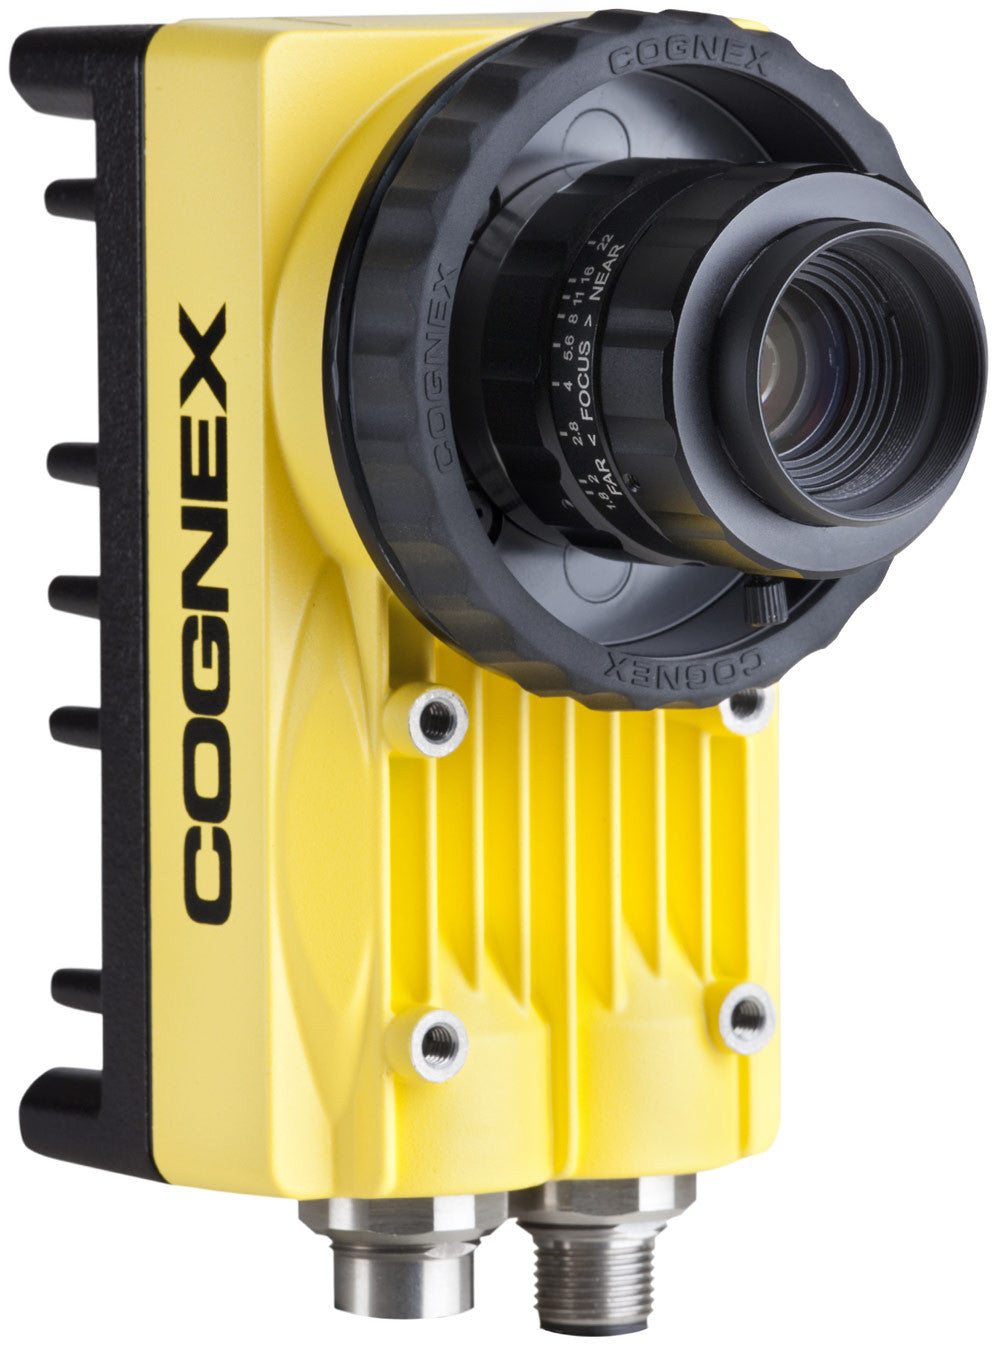 Photo of Cognex In-Sight Machine Vision Camera 5705-11